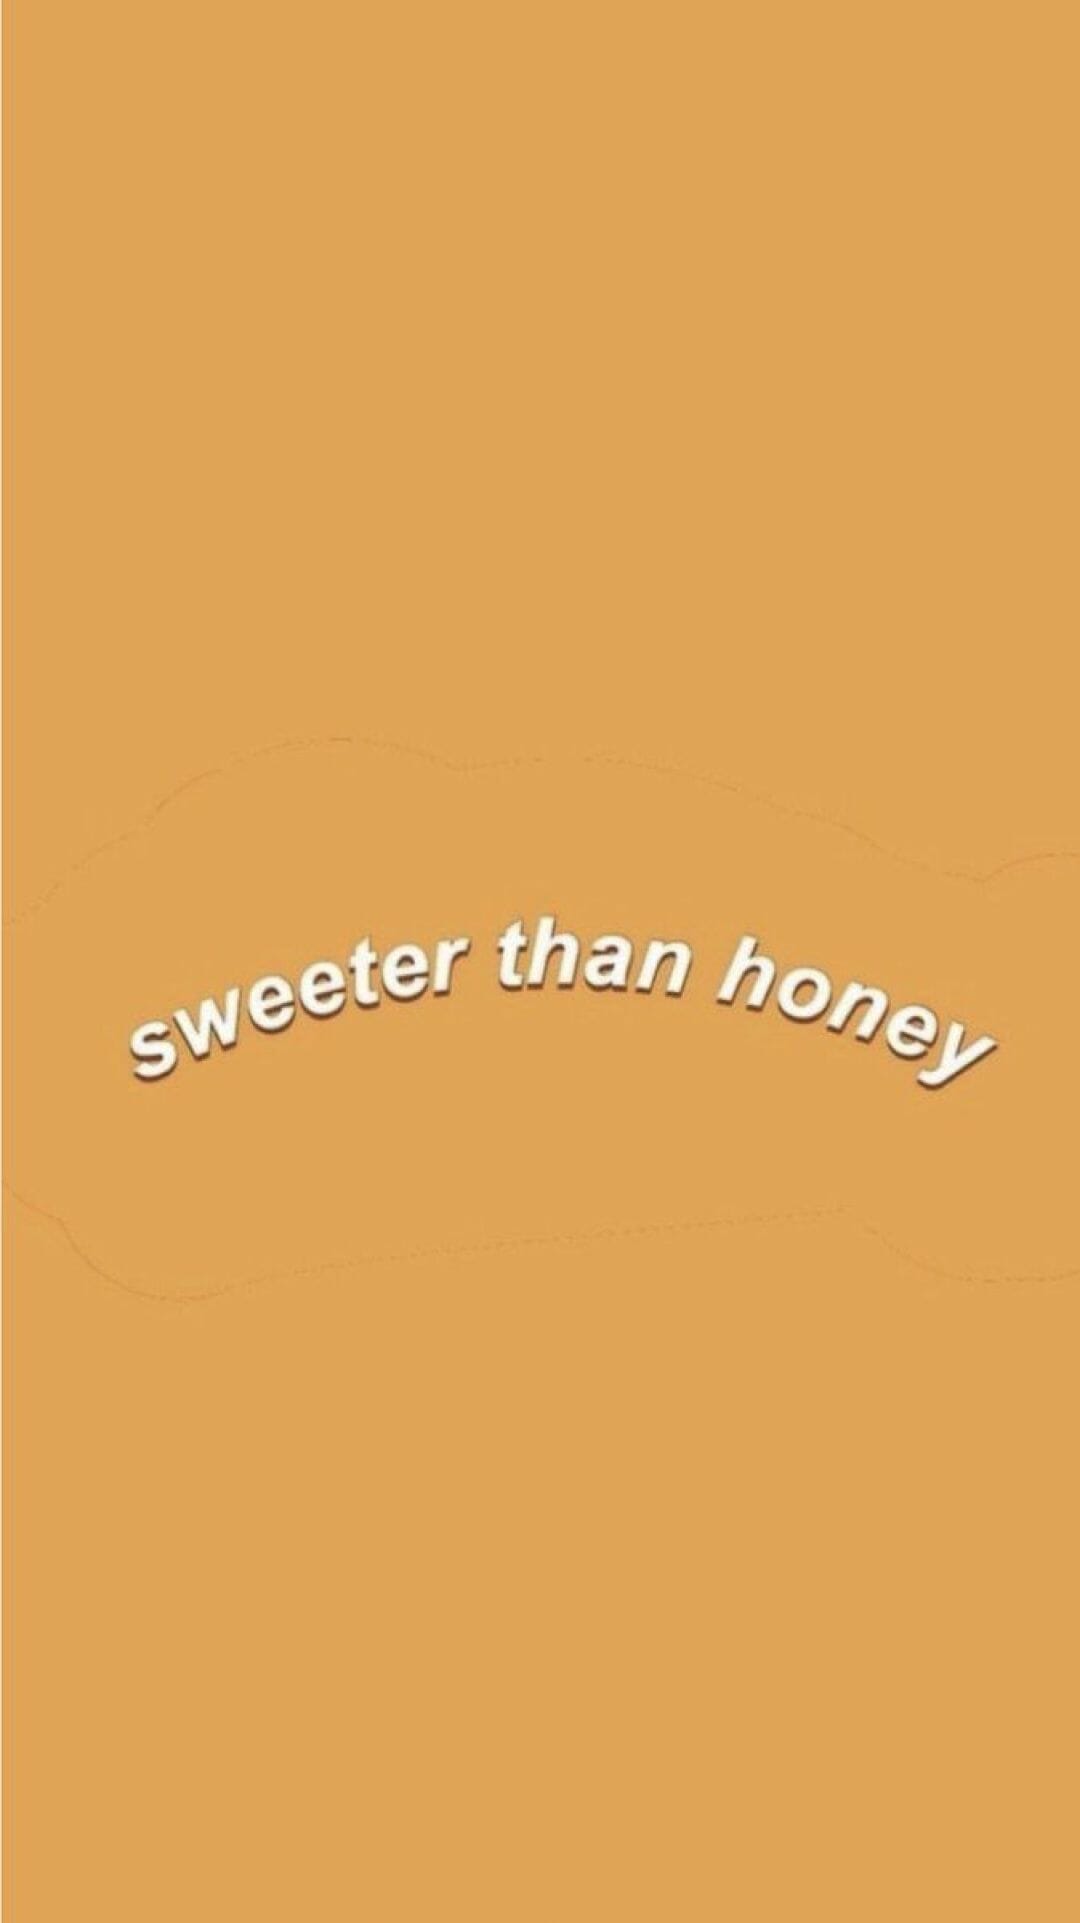 Aesthetic background, sweeter than honey, wallpaper, phone background - Orange